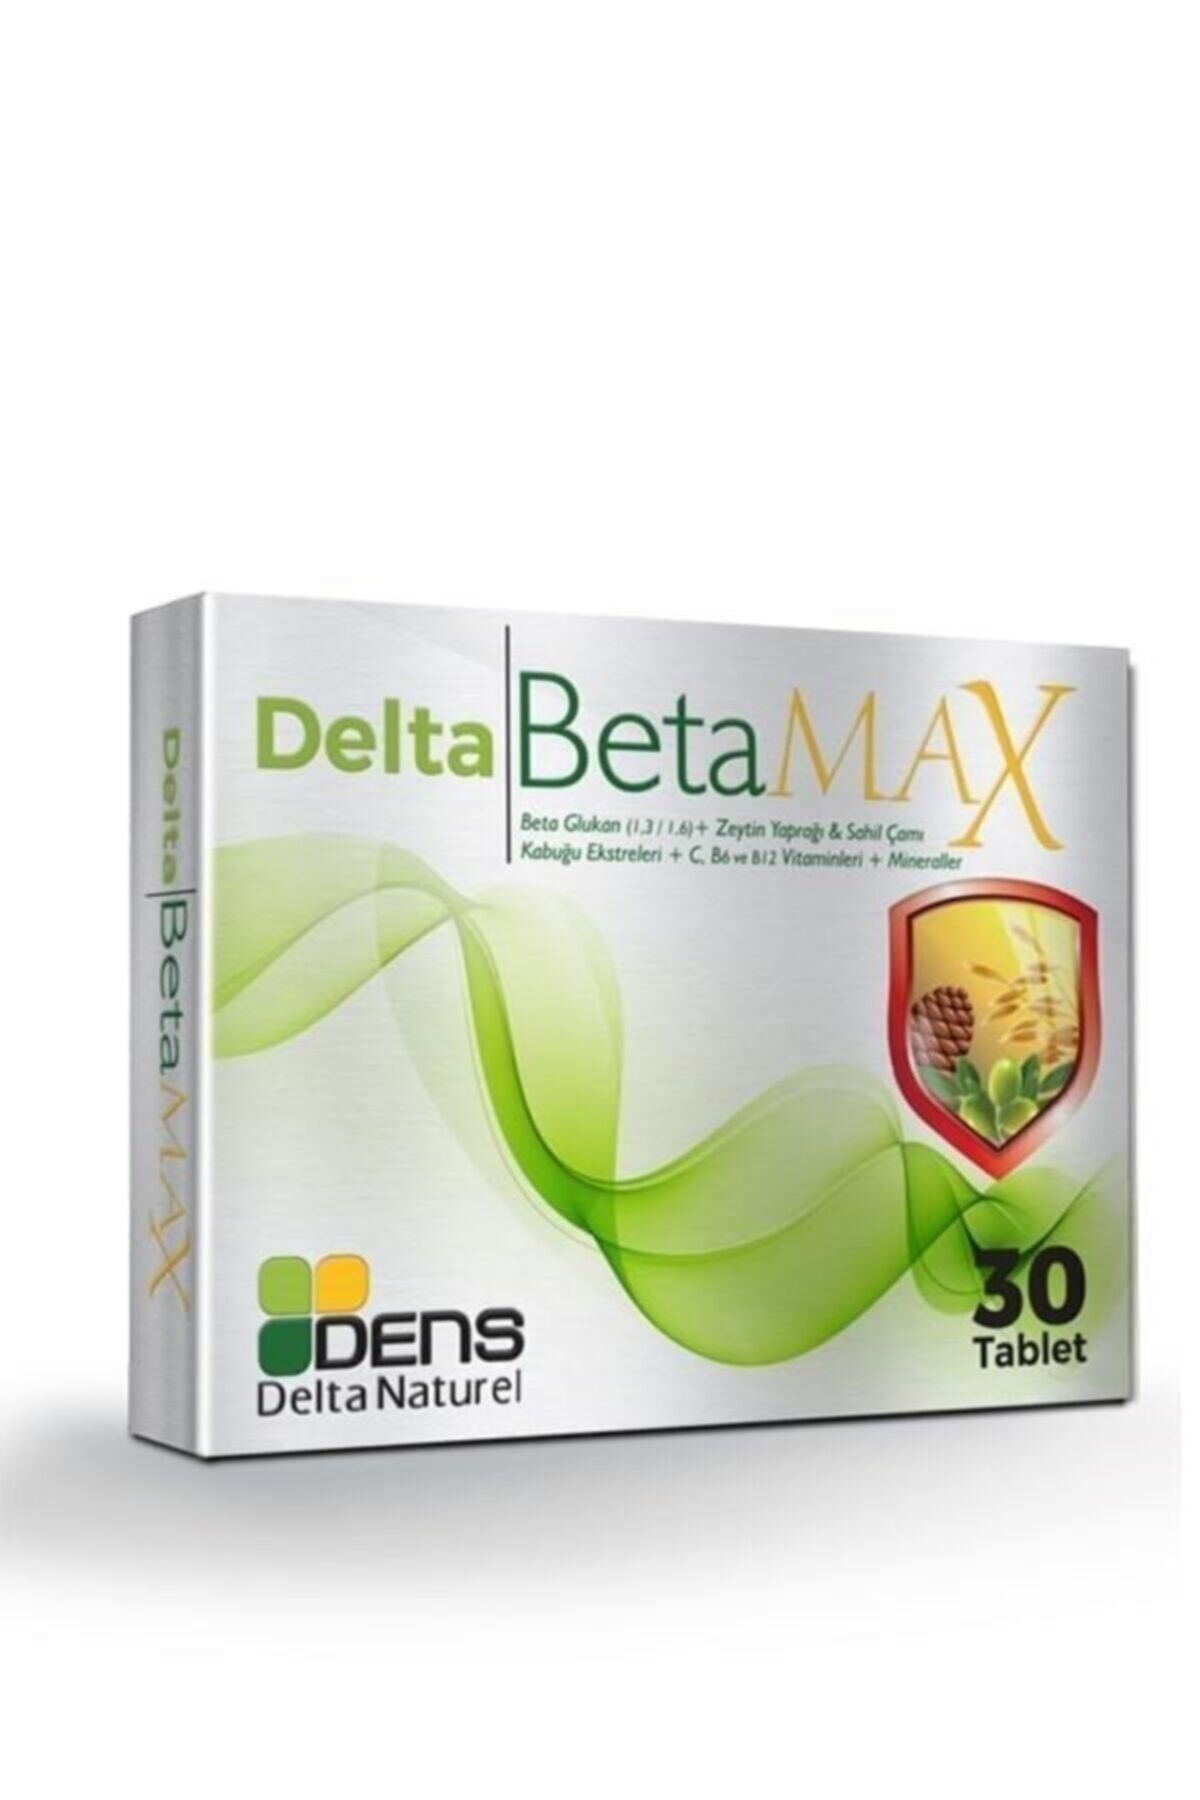 Dens Delta Naturel Delta Betamax 30 Tablet